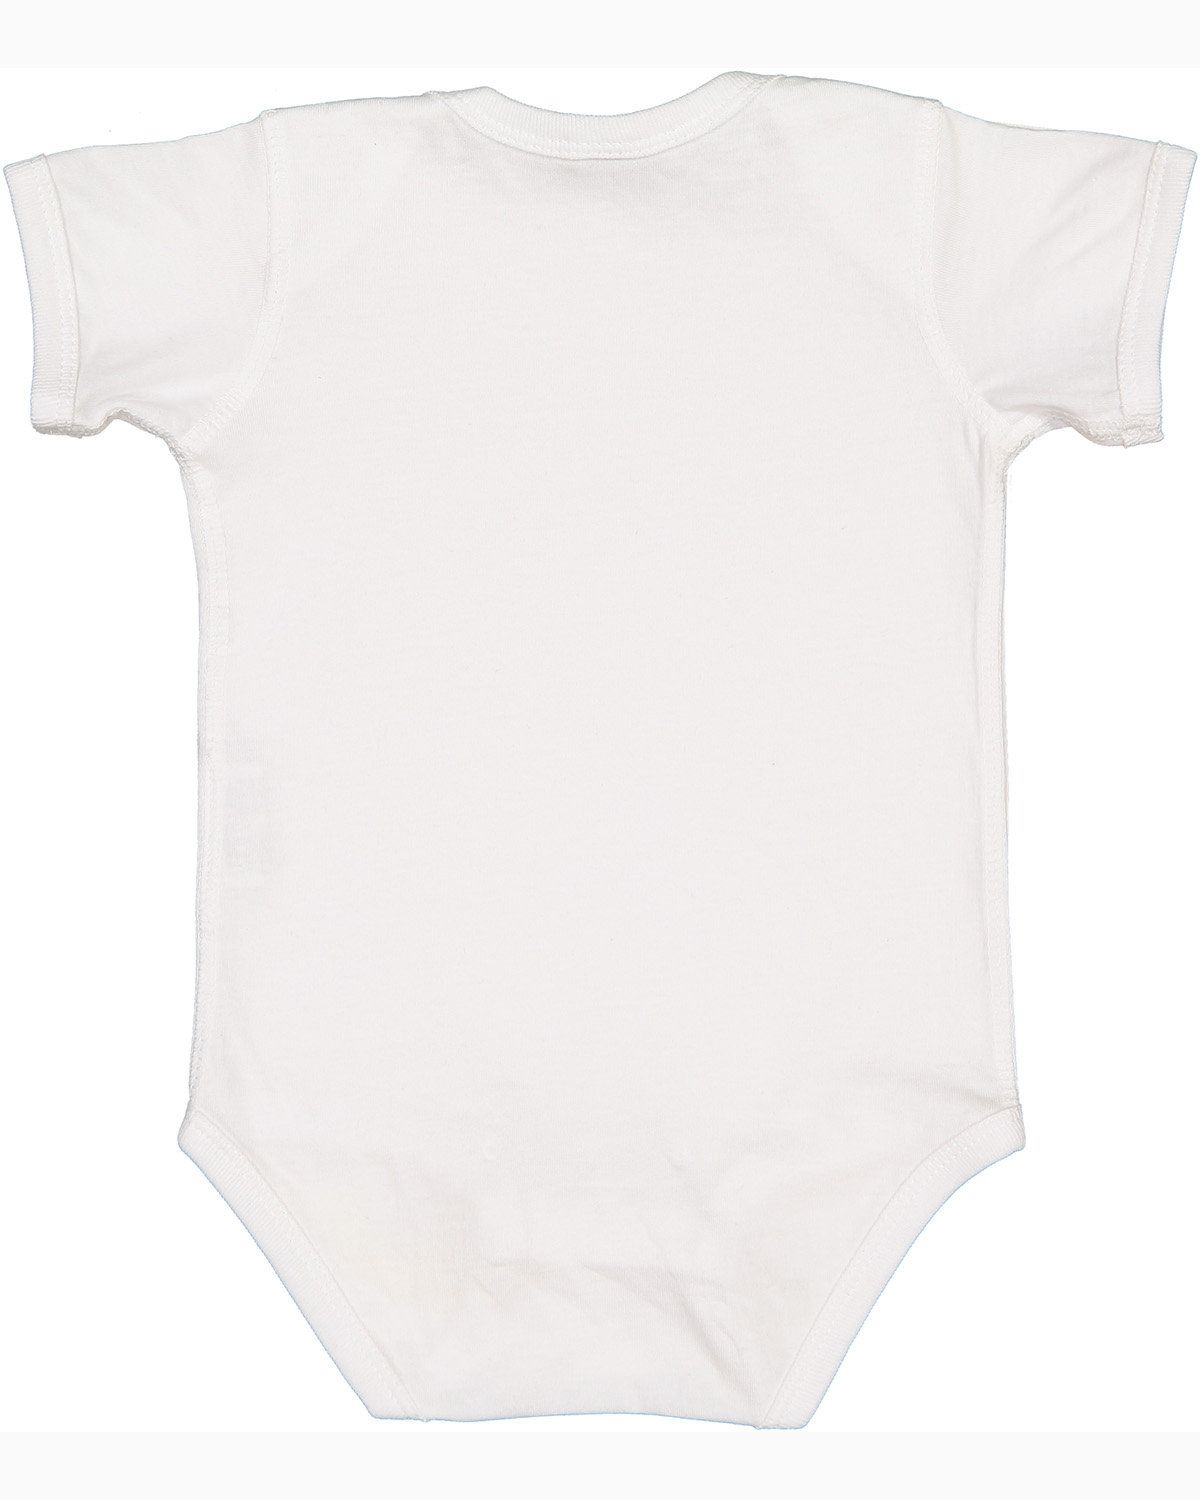 Rabbit Skins 4424 Infant Fine Jersey Bodysuit - Hot Pink - 18M